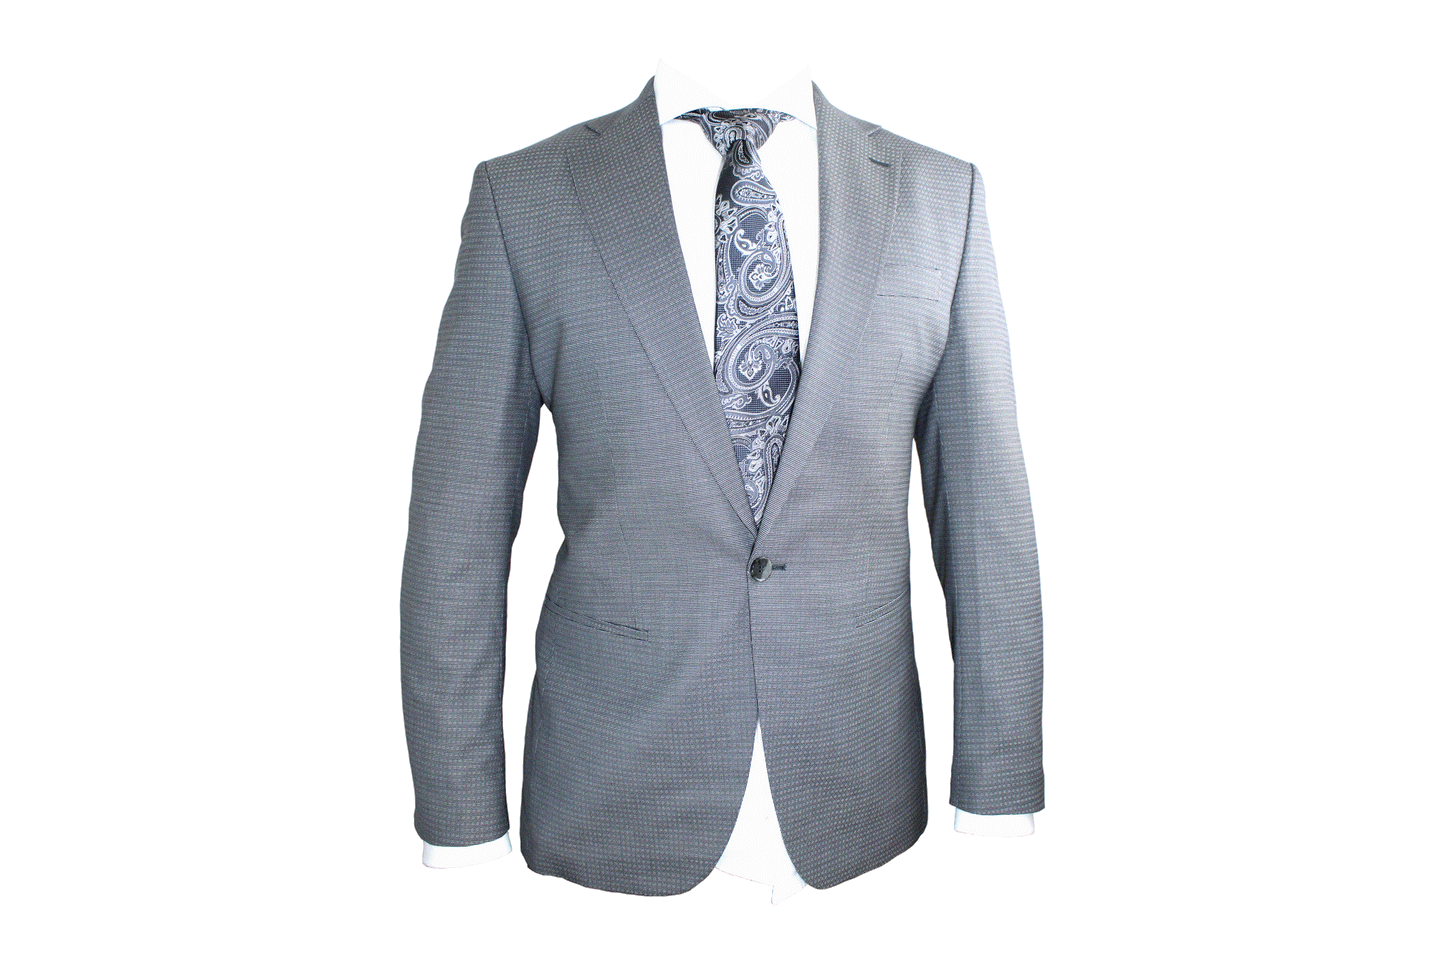 Polermo Light Grey Suit